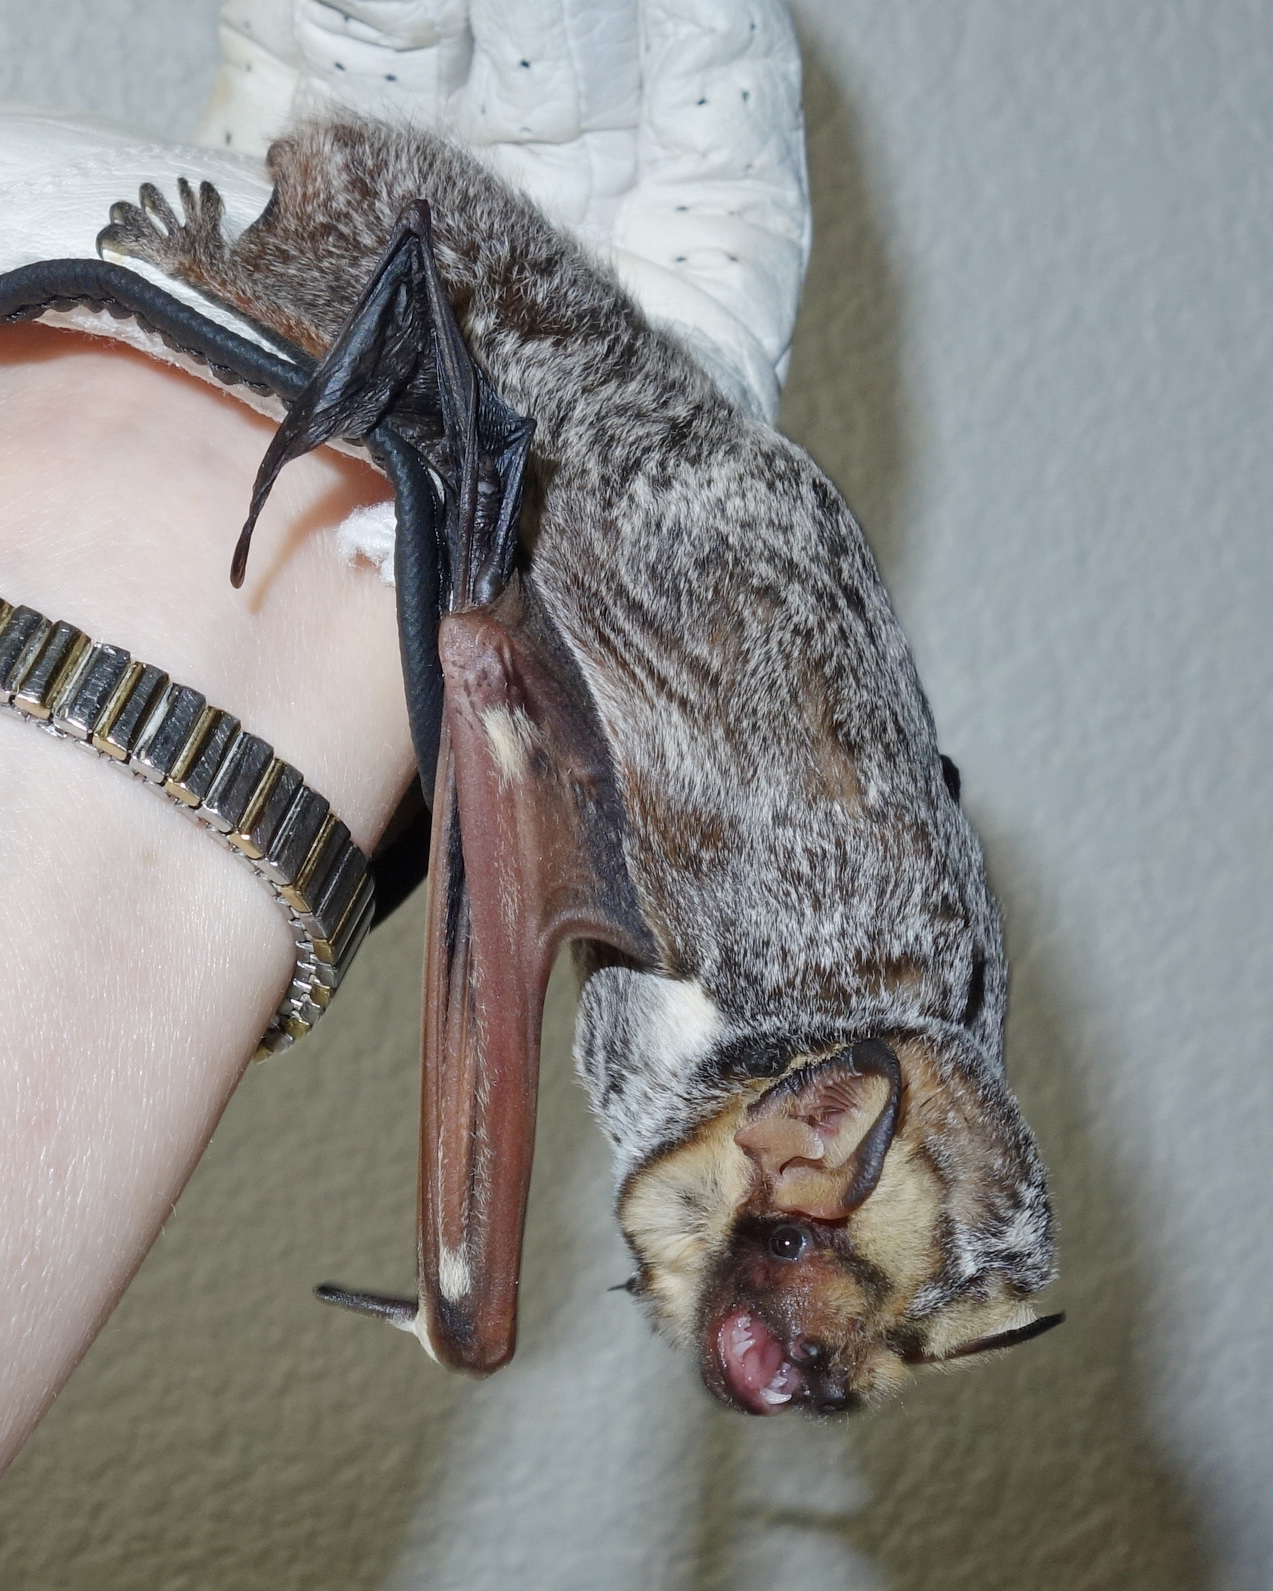 DSC06209 Hoary bat suspended with head turned toward camera